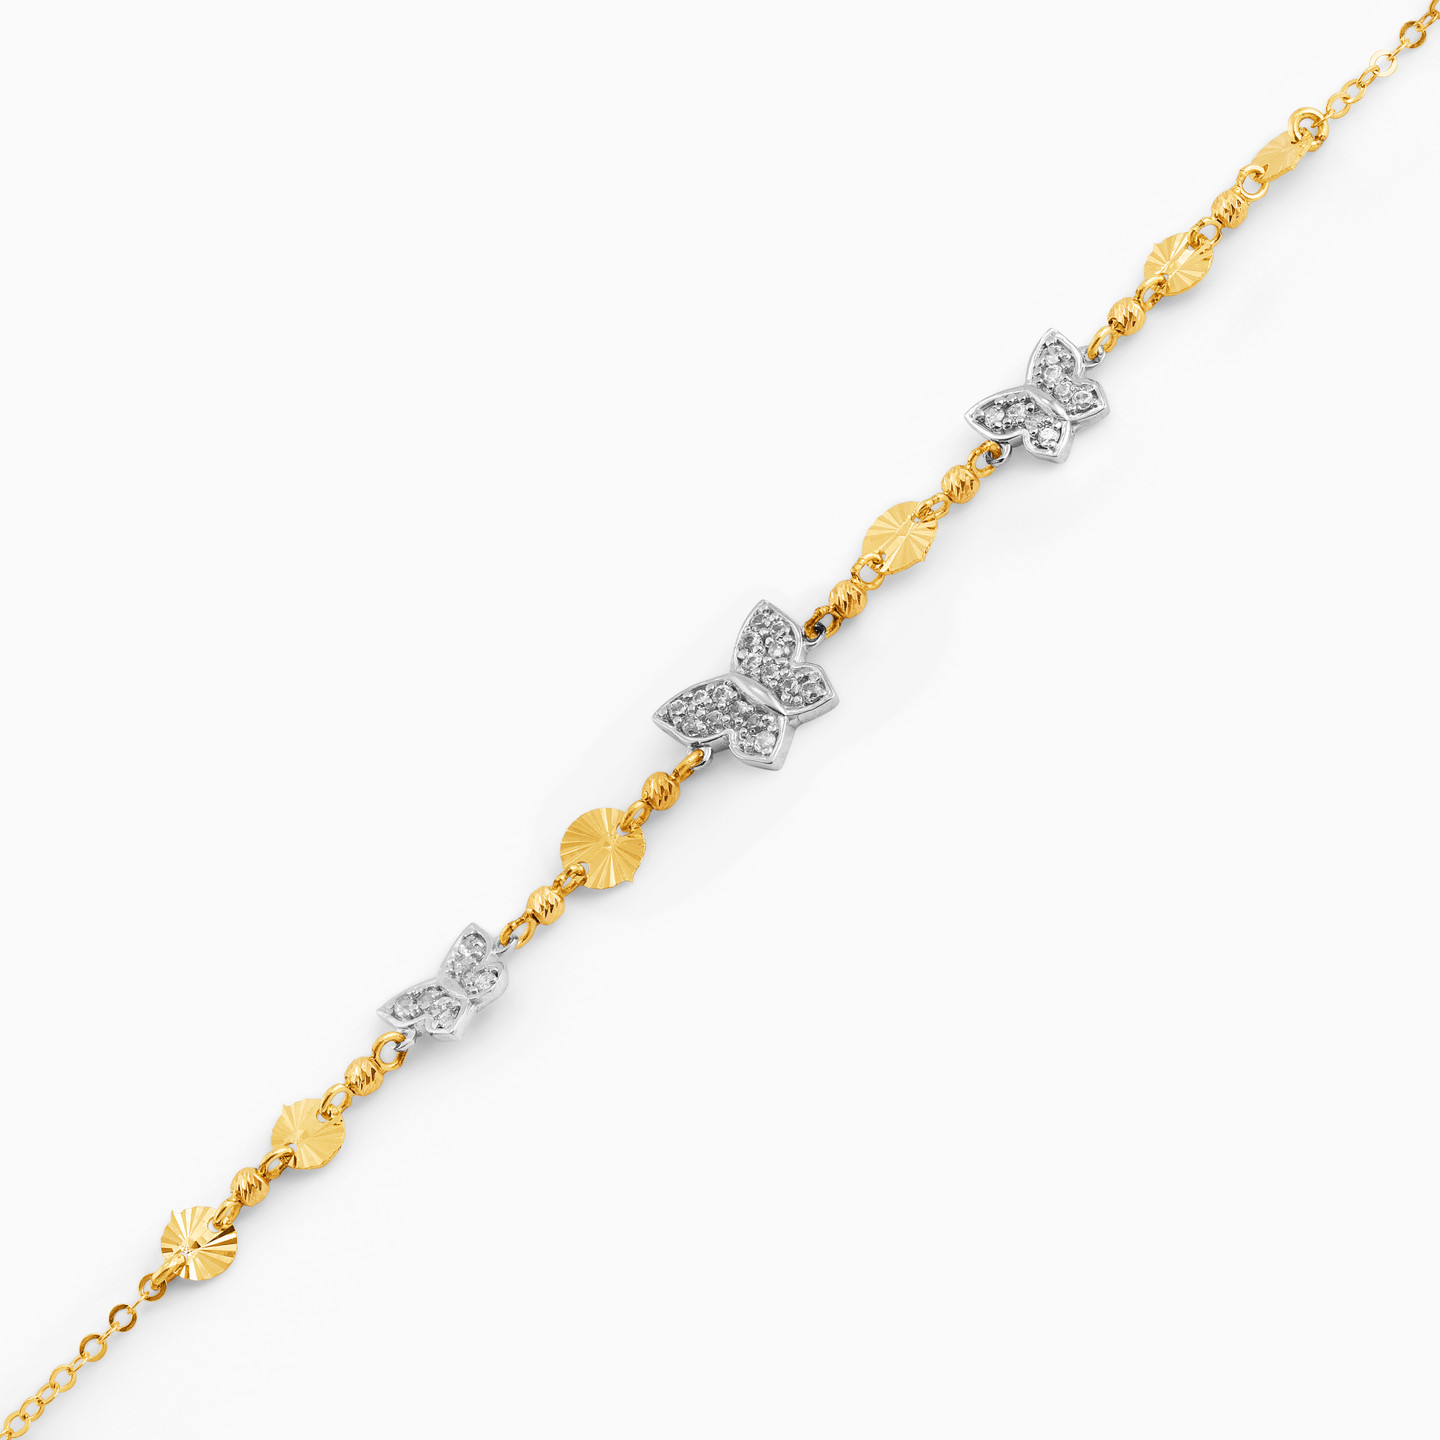 18K Gold Cubic Zirconia Chain Bracelet - 3